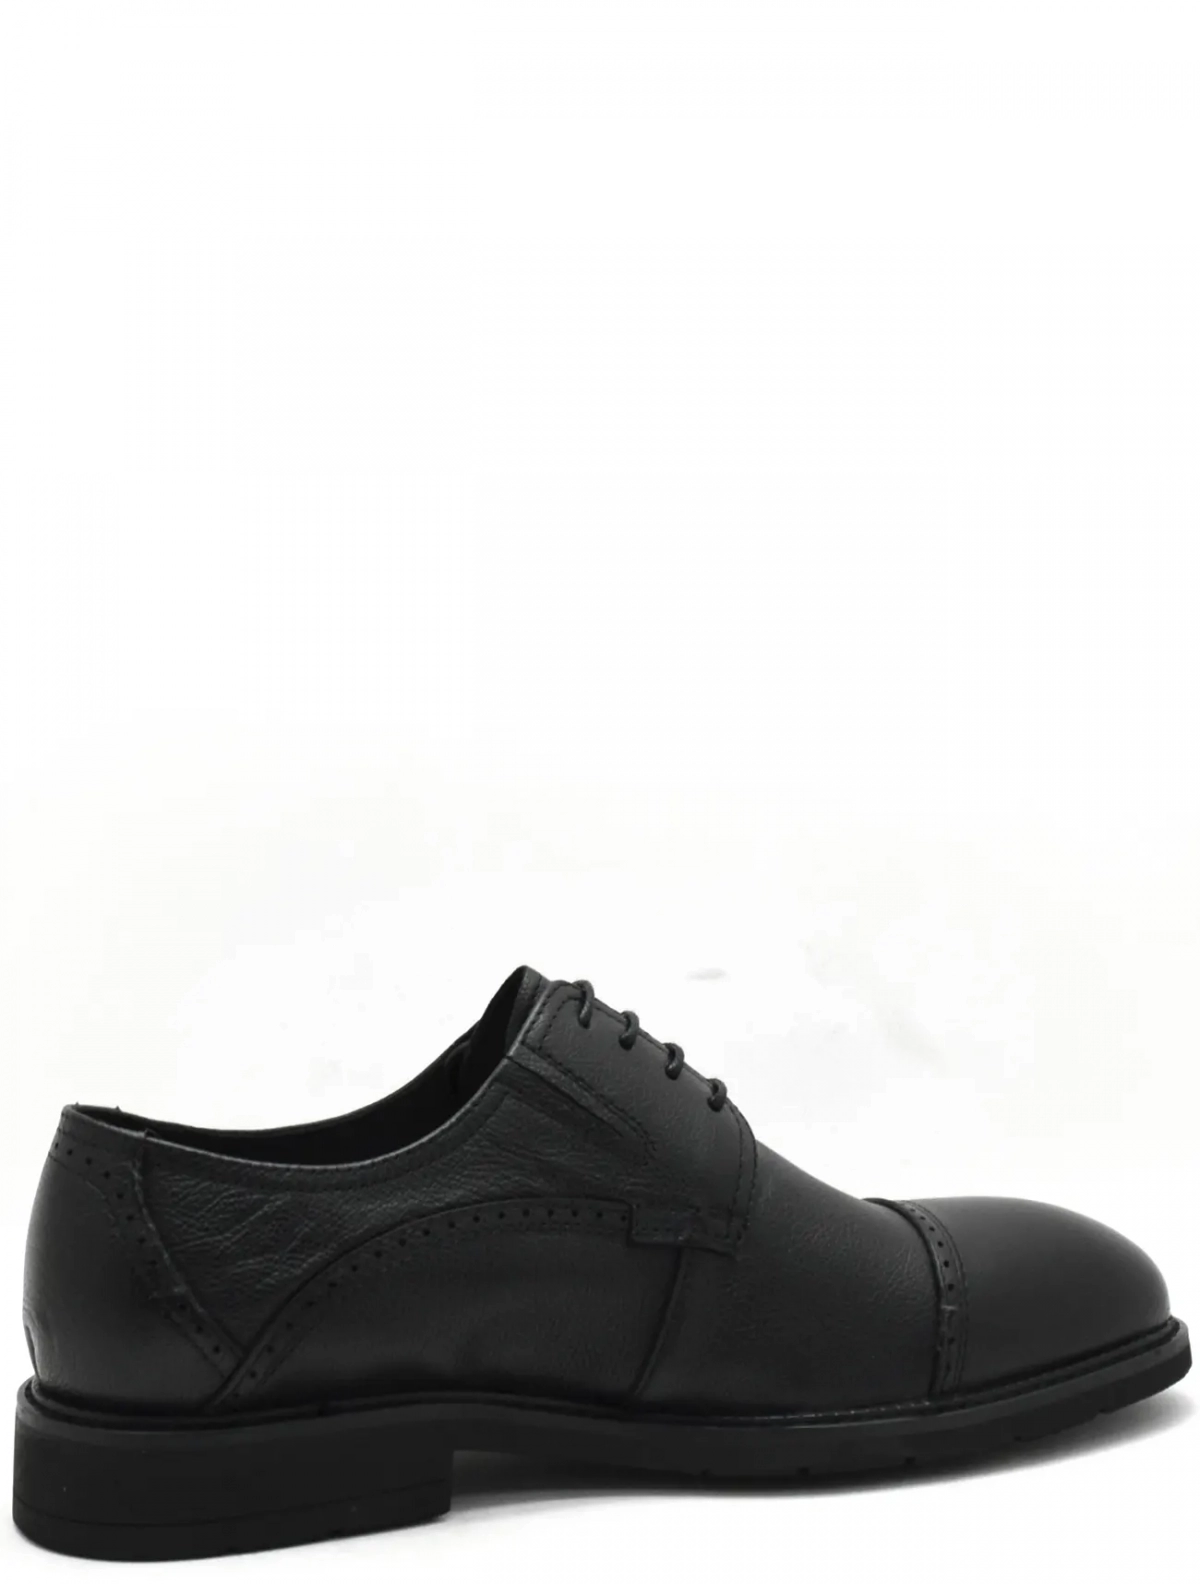 Roscote K11206J-601-T3765H мужские туфли